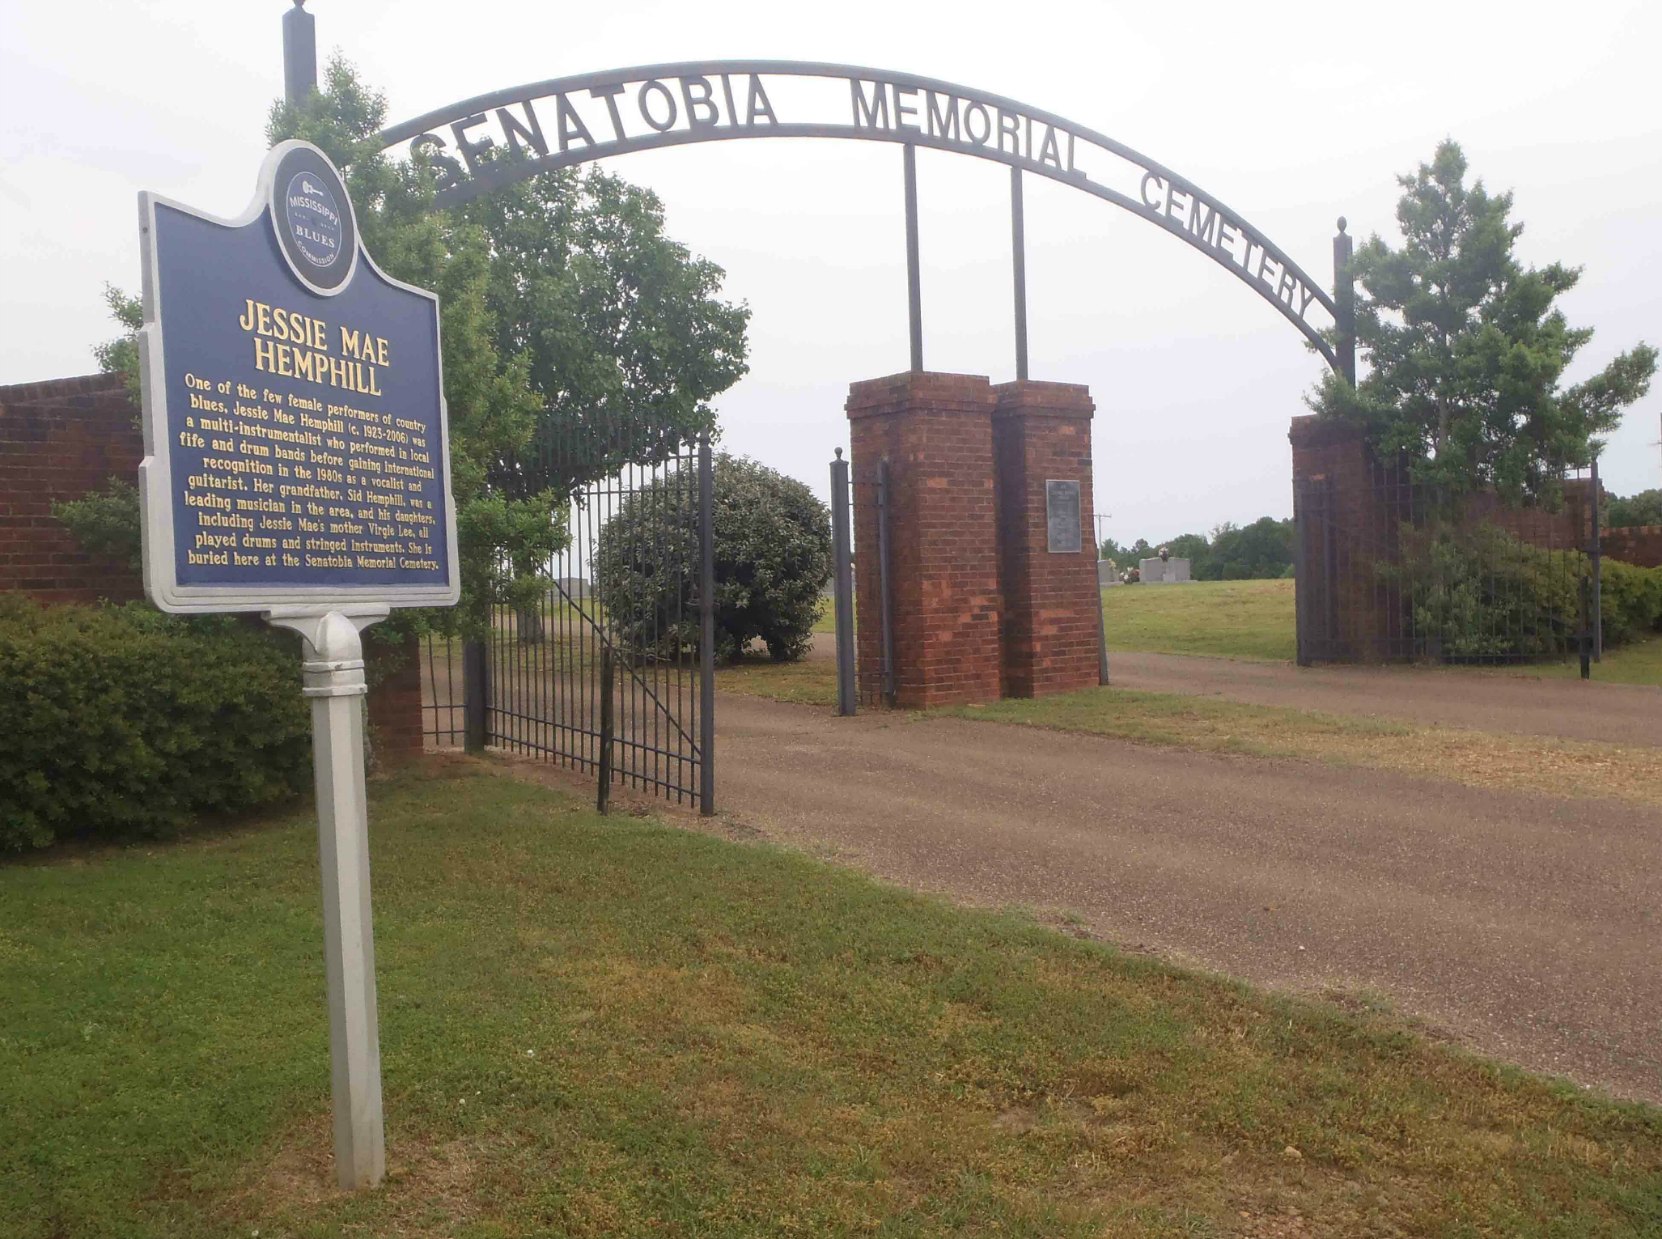 Mississippi Blues Trail marker for Jessie Mae Hemphill at the entrance to Senatobia Memorial Cemetery, Senatobia, Mississippi.